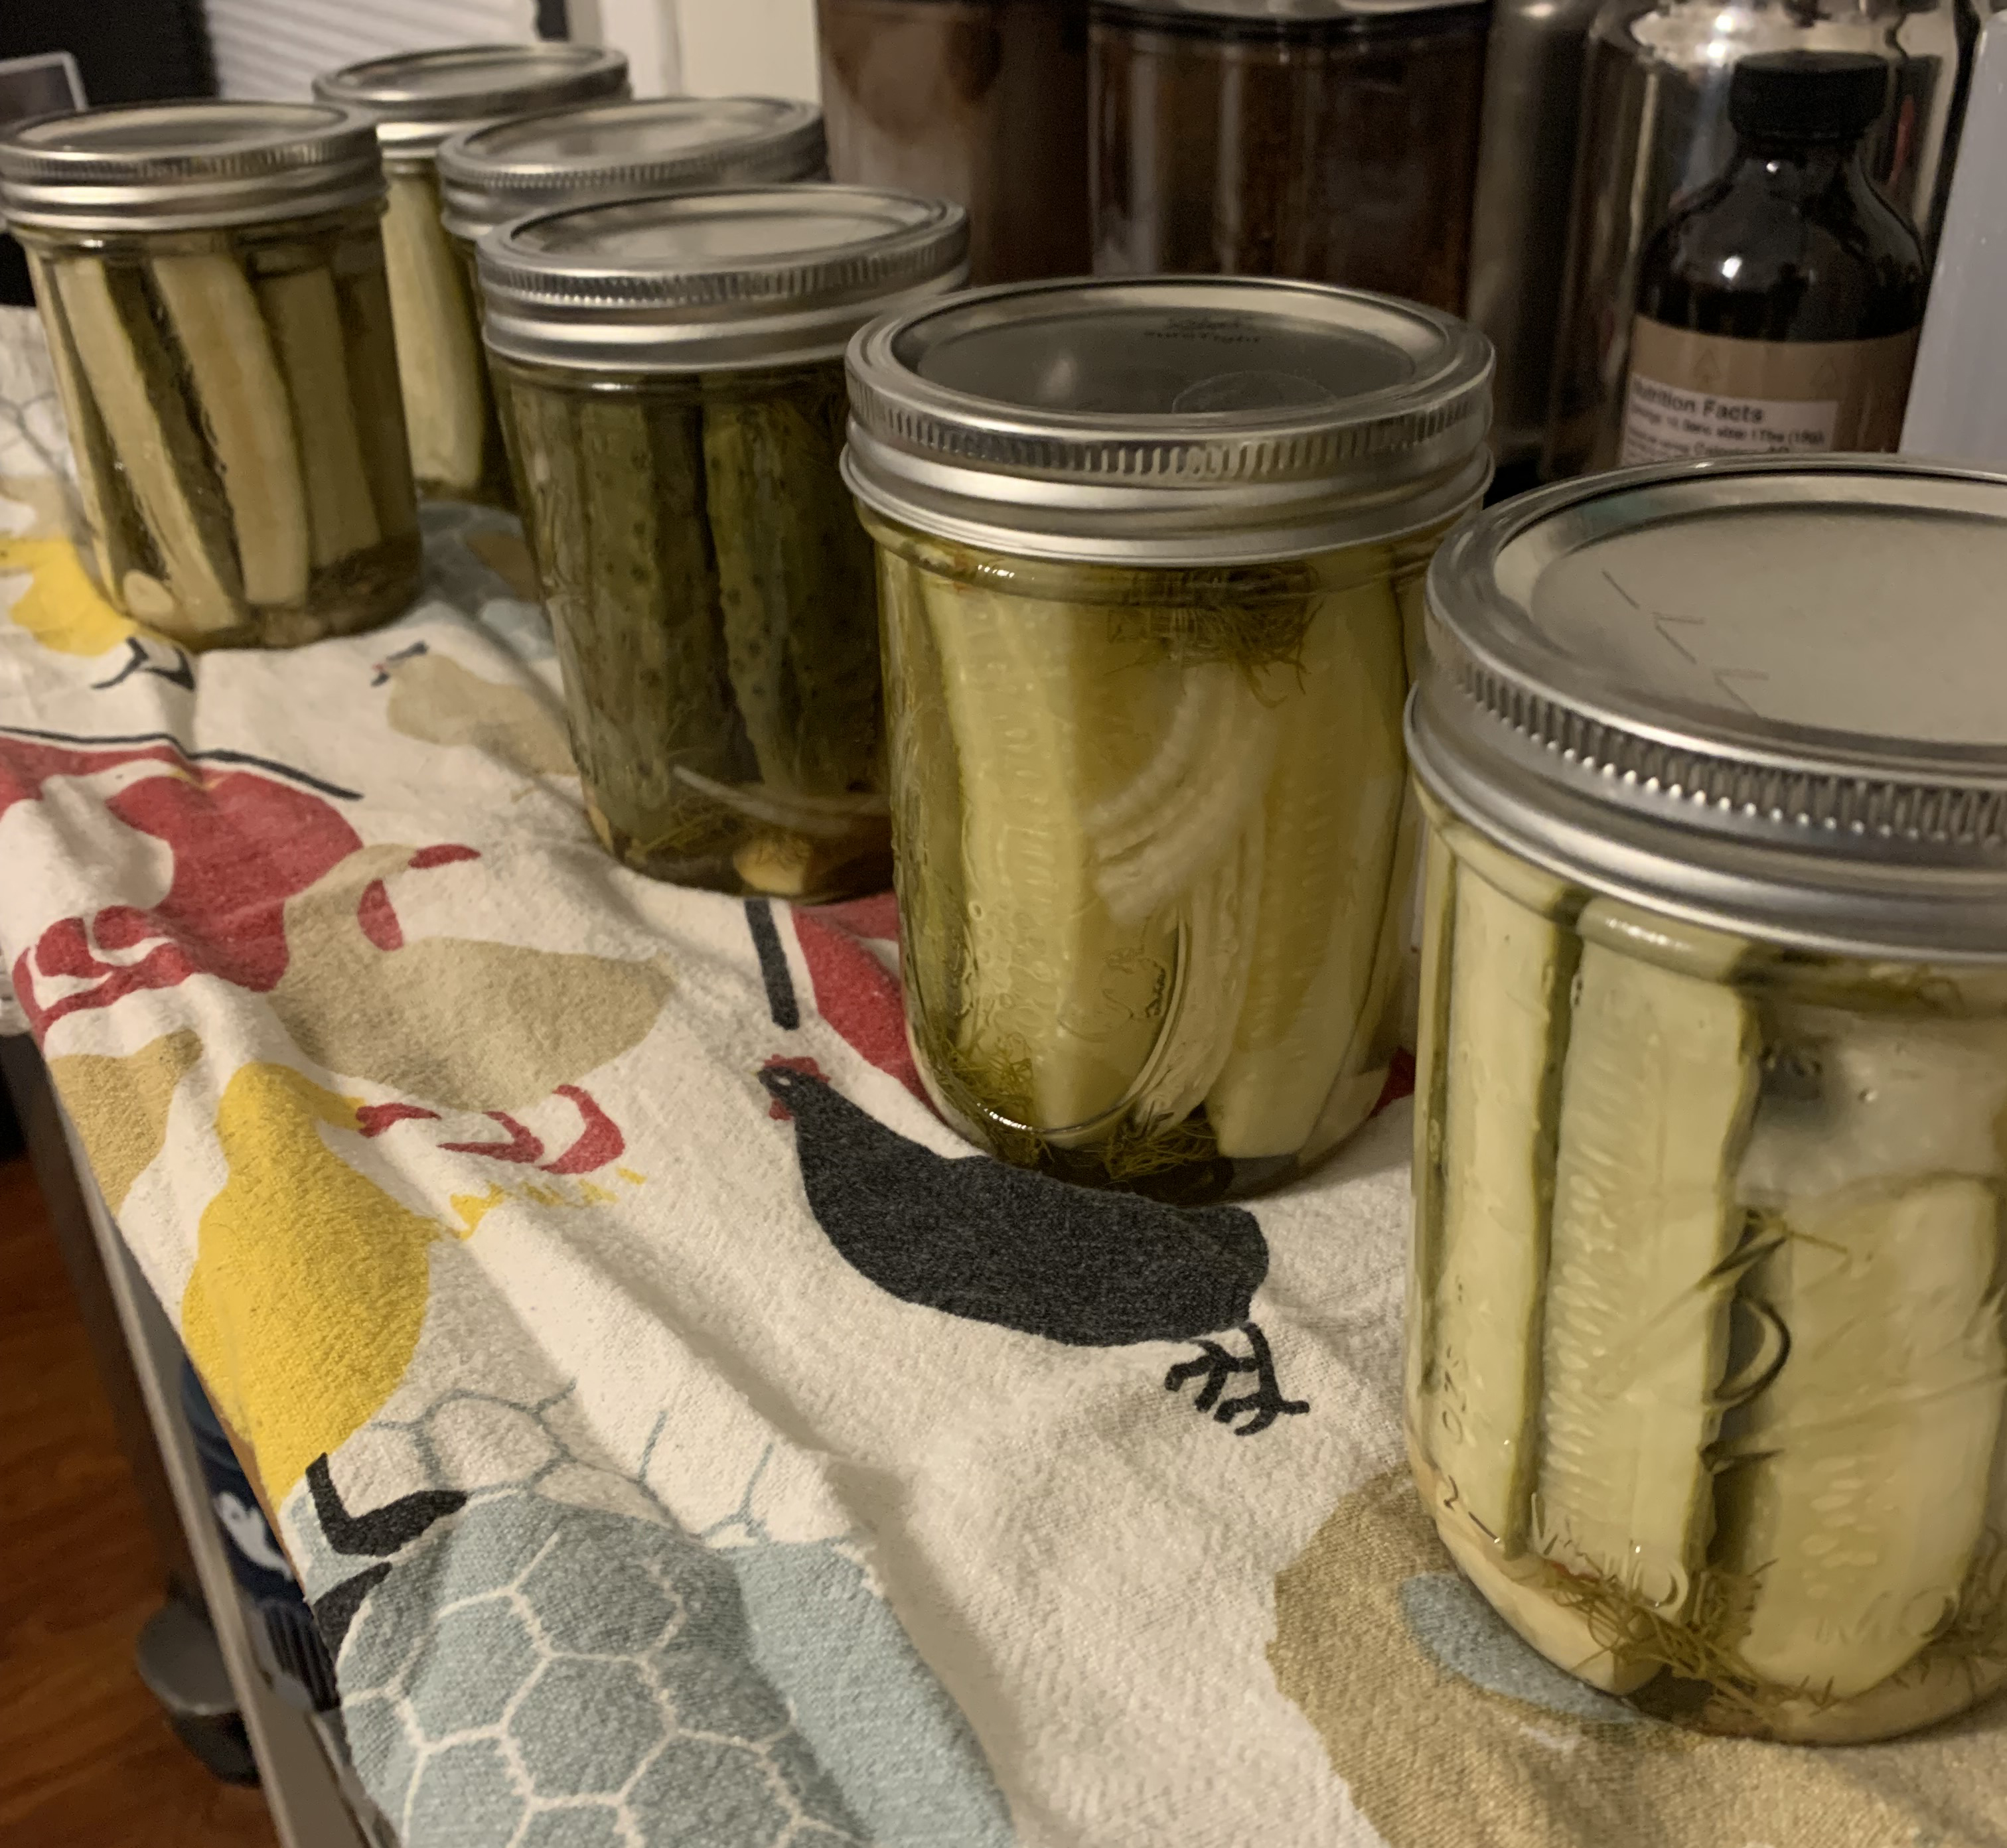 six mason jars of pickles sit resting on a kitchen towel